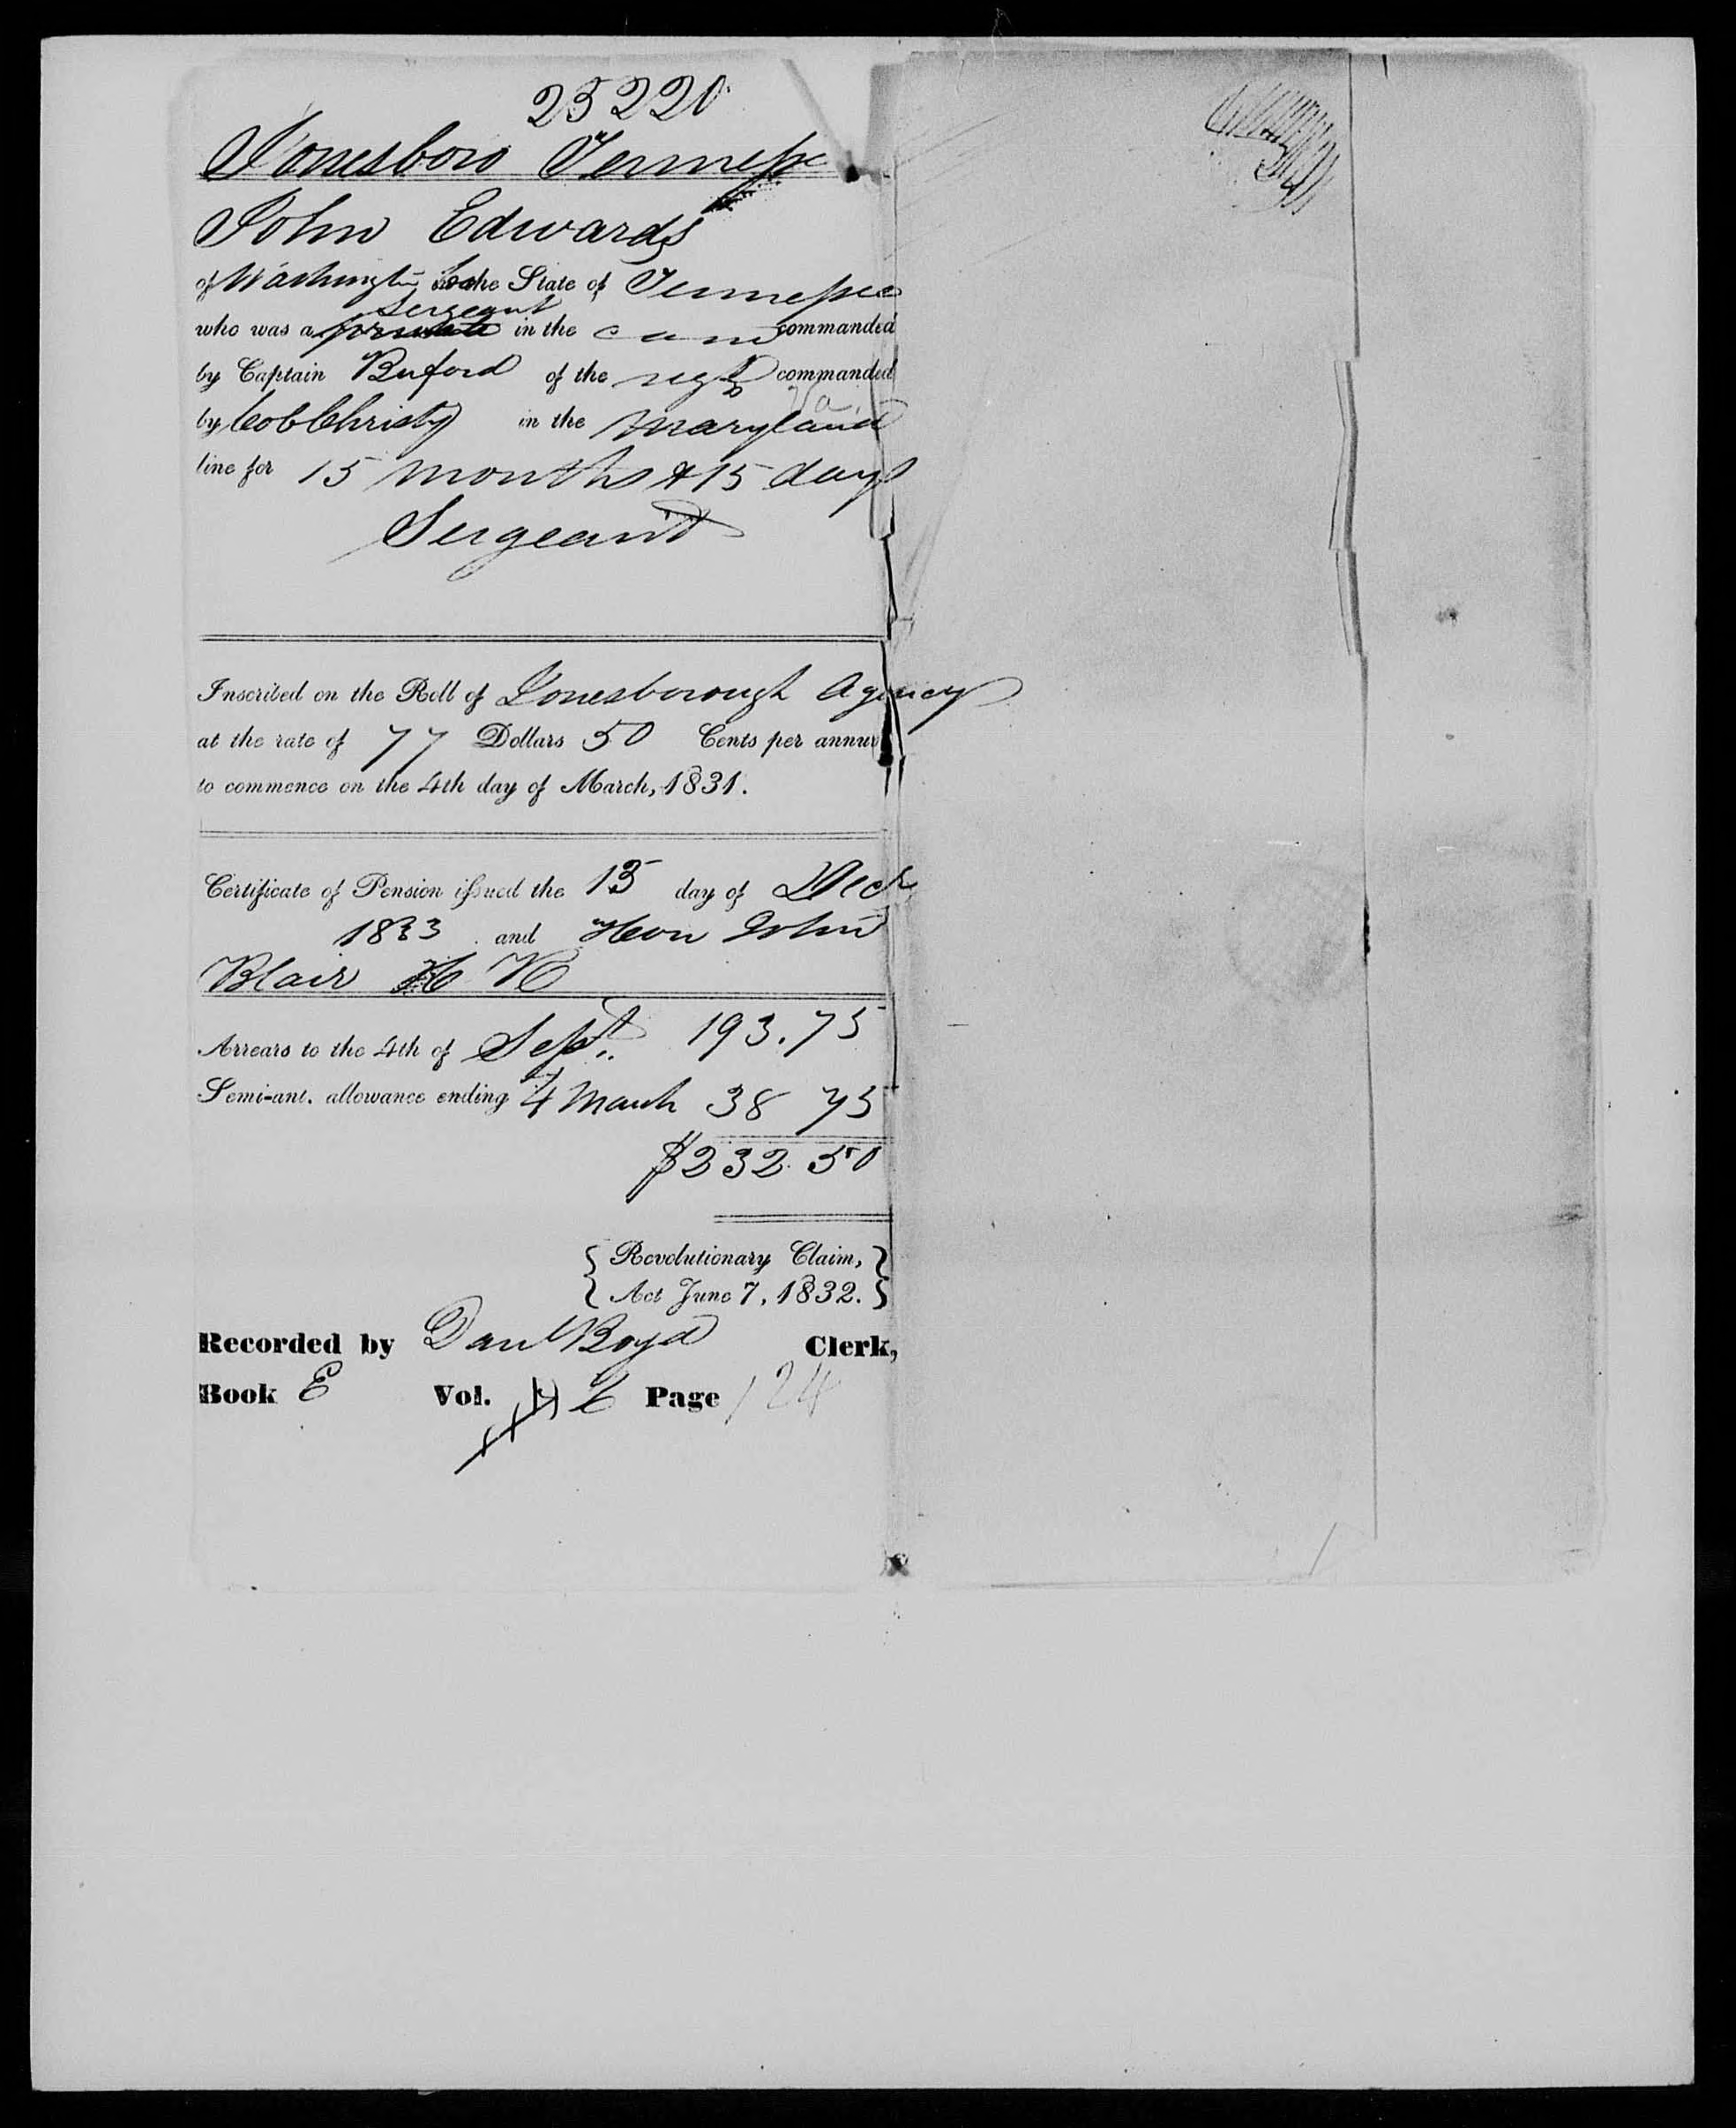 Docket for Pension from the U.S. Pension Office for John Edwards, 13 December 1833